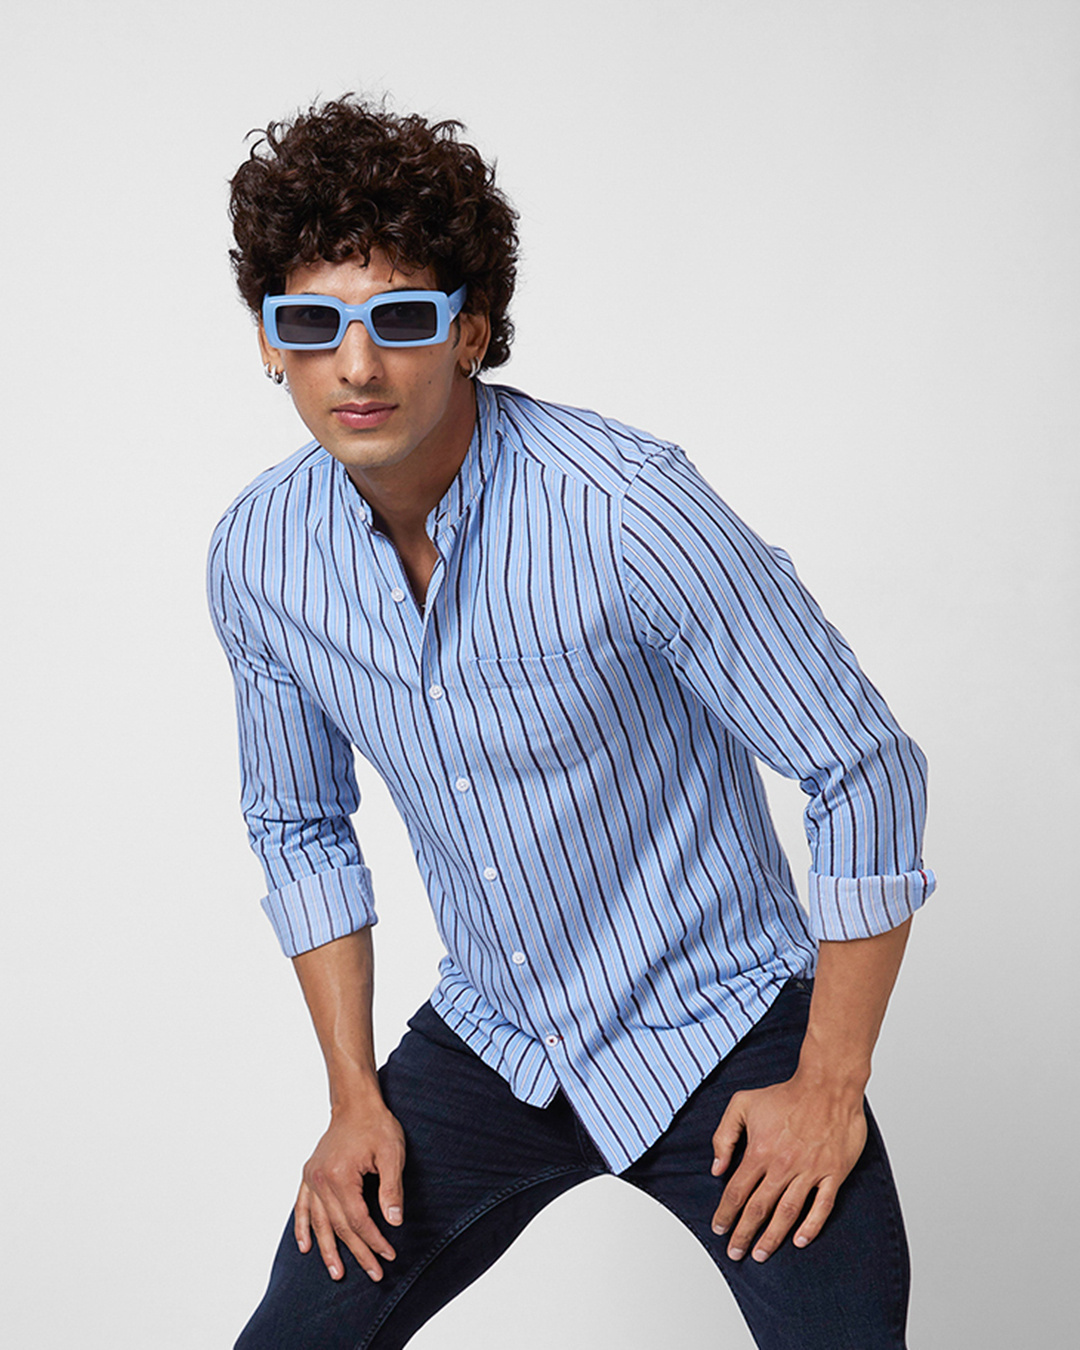 Buy Men's Blue Striped Shirt Online at Bewakoof